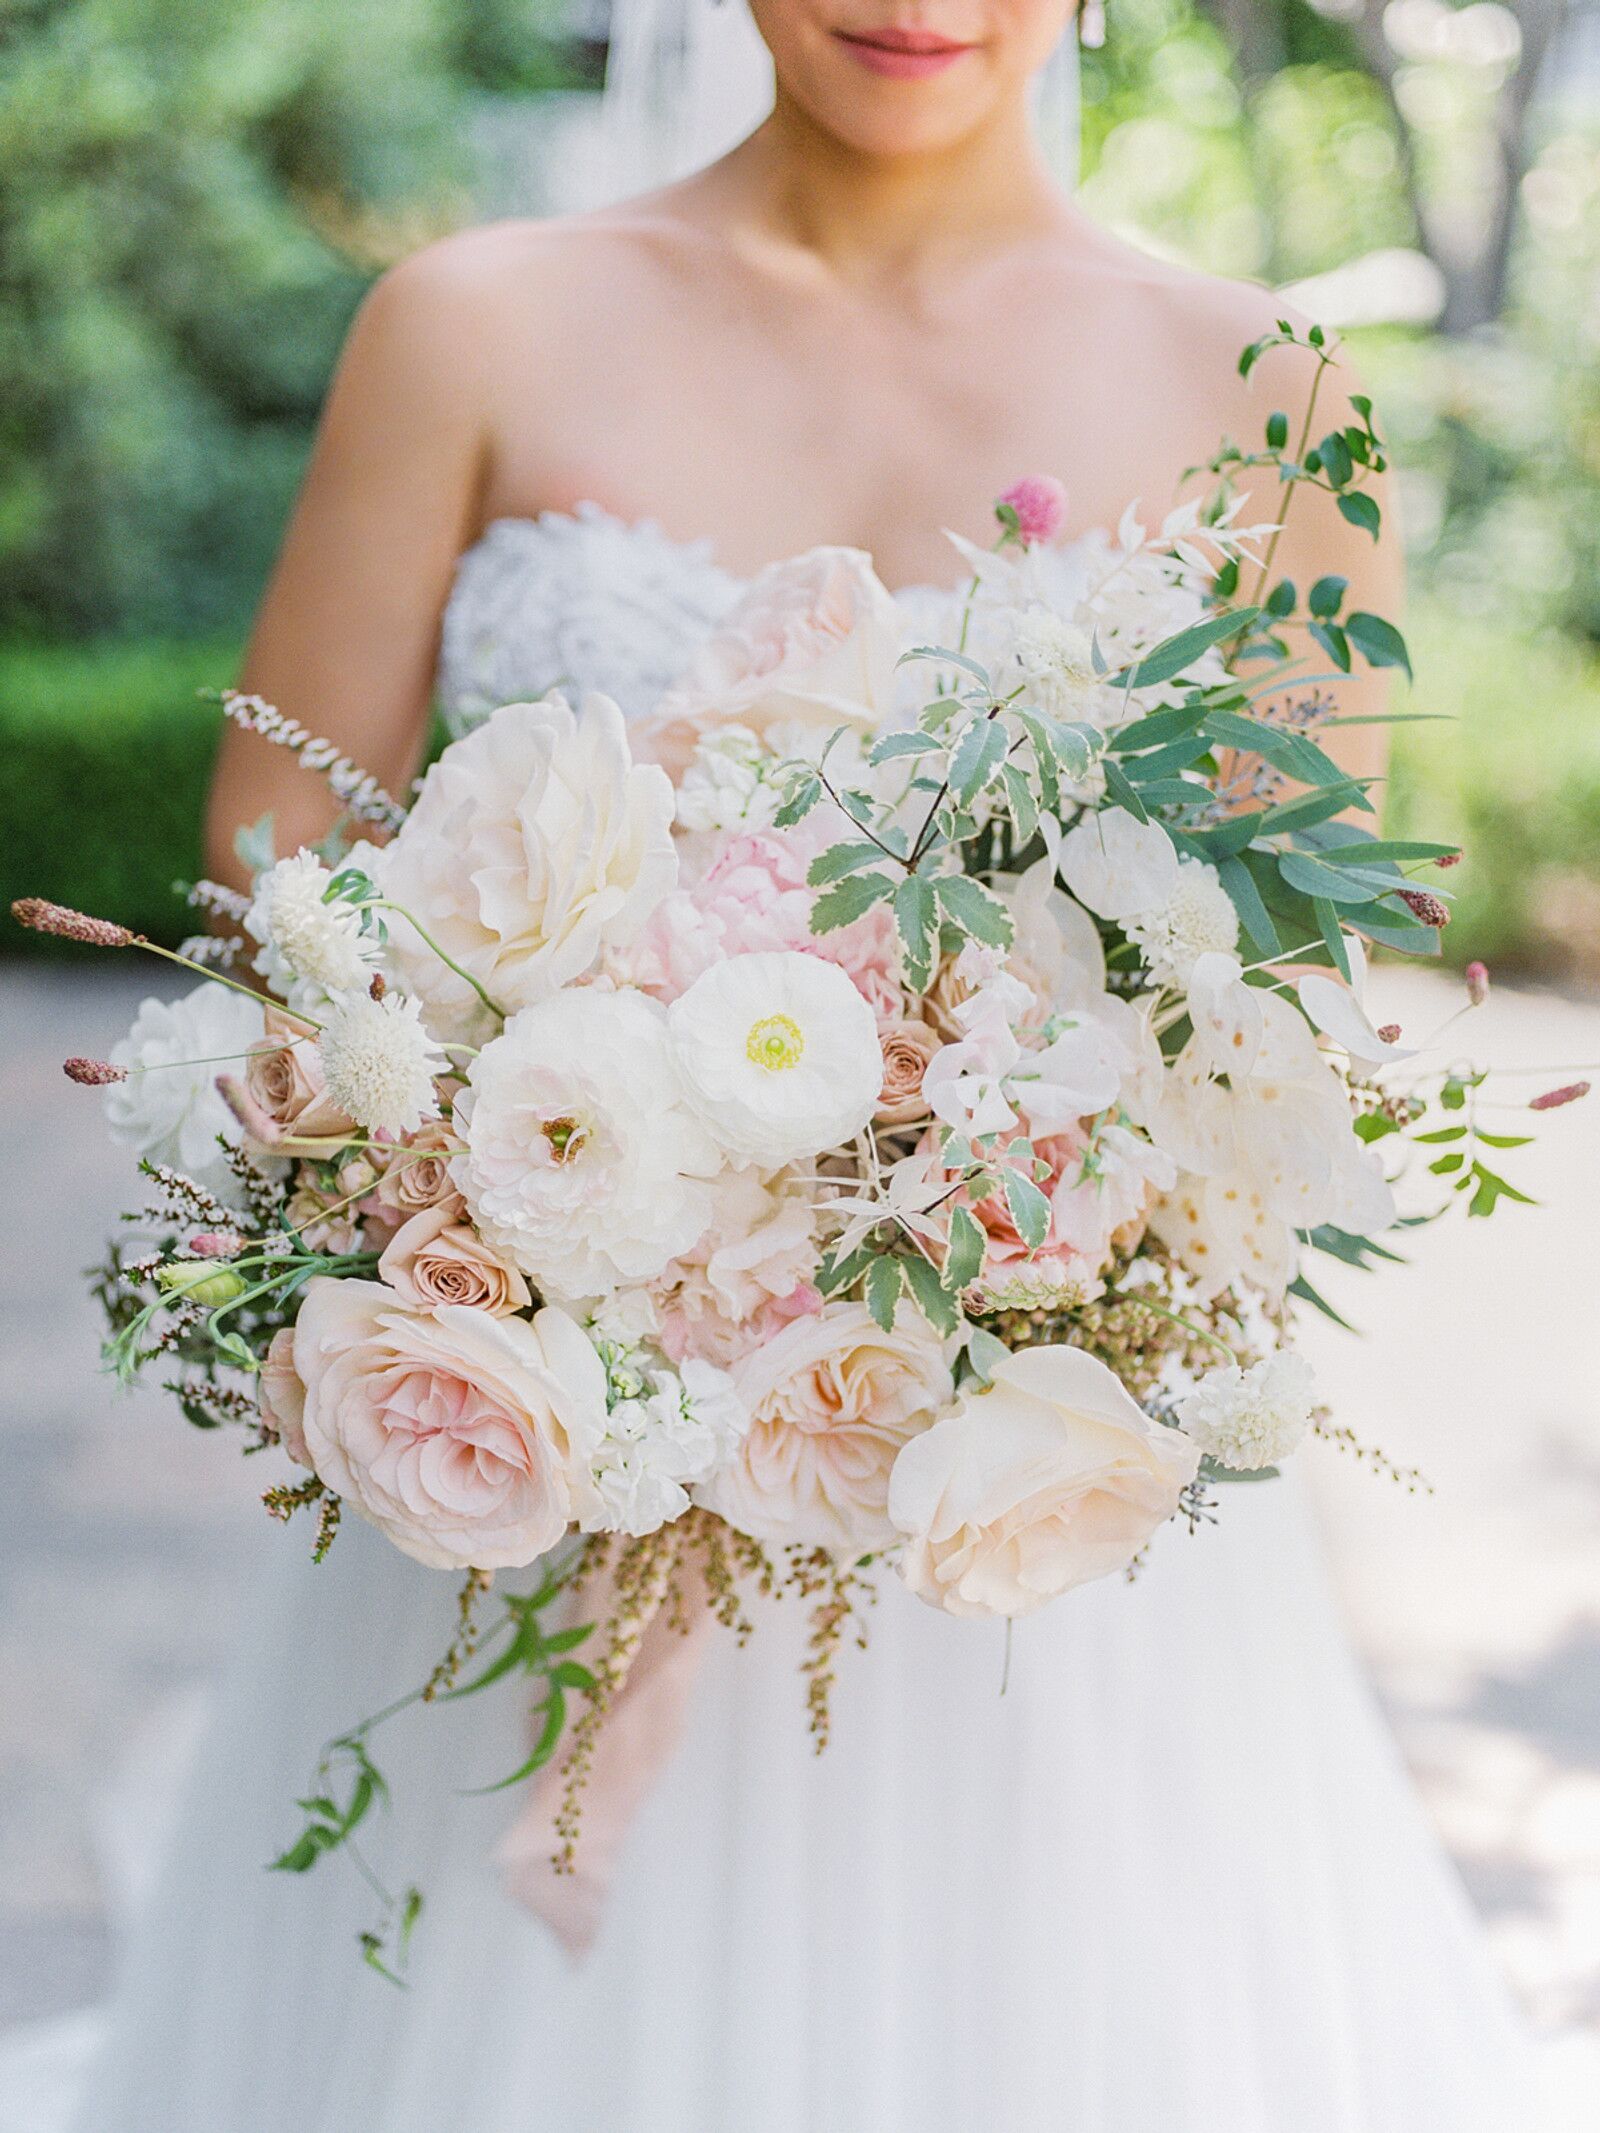 Romantic Blush-and-White Wedding Bouquet for California Wedding